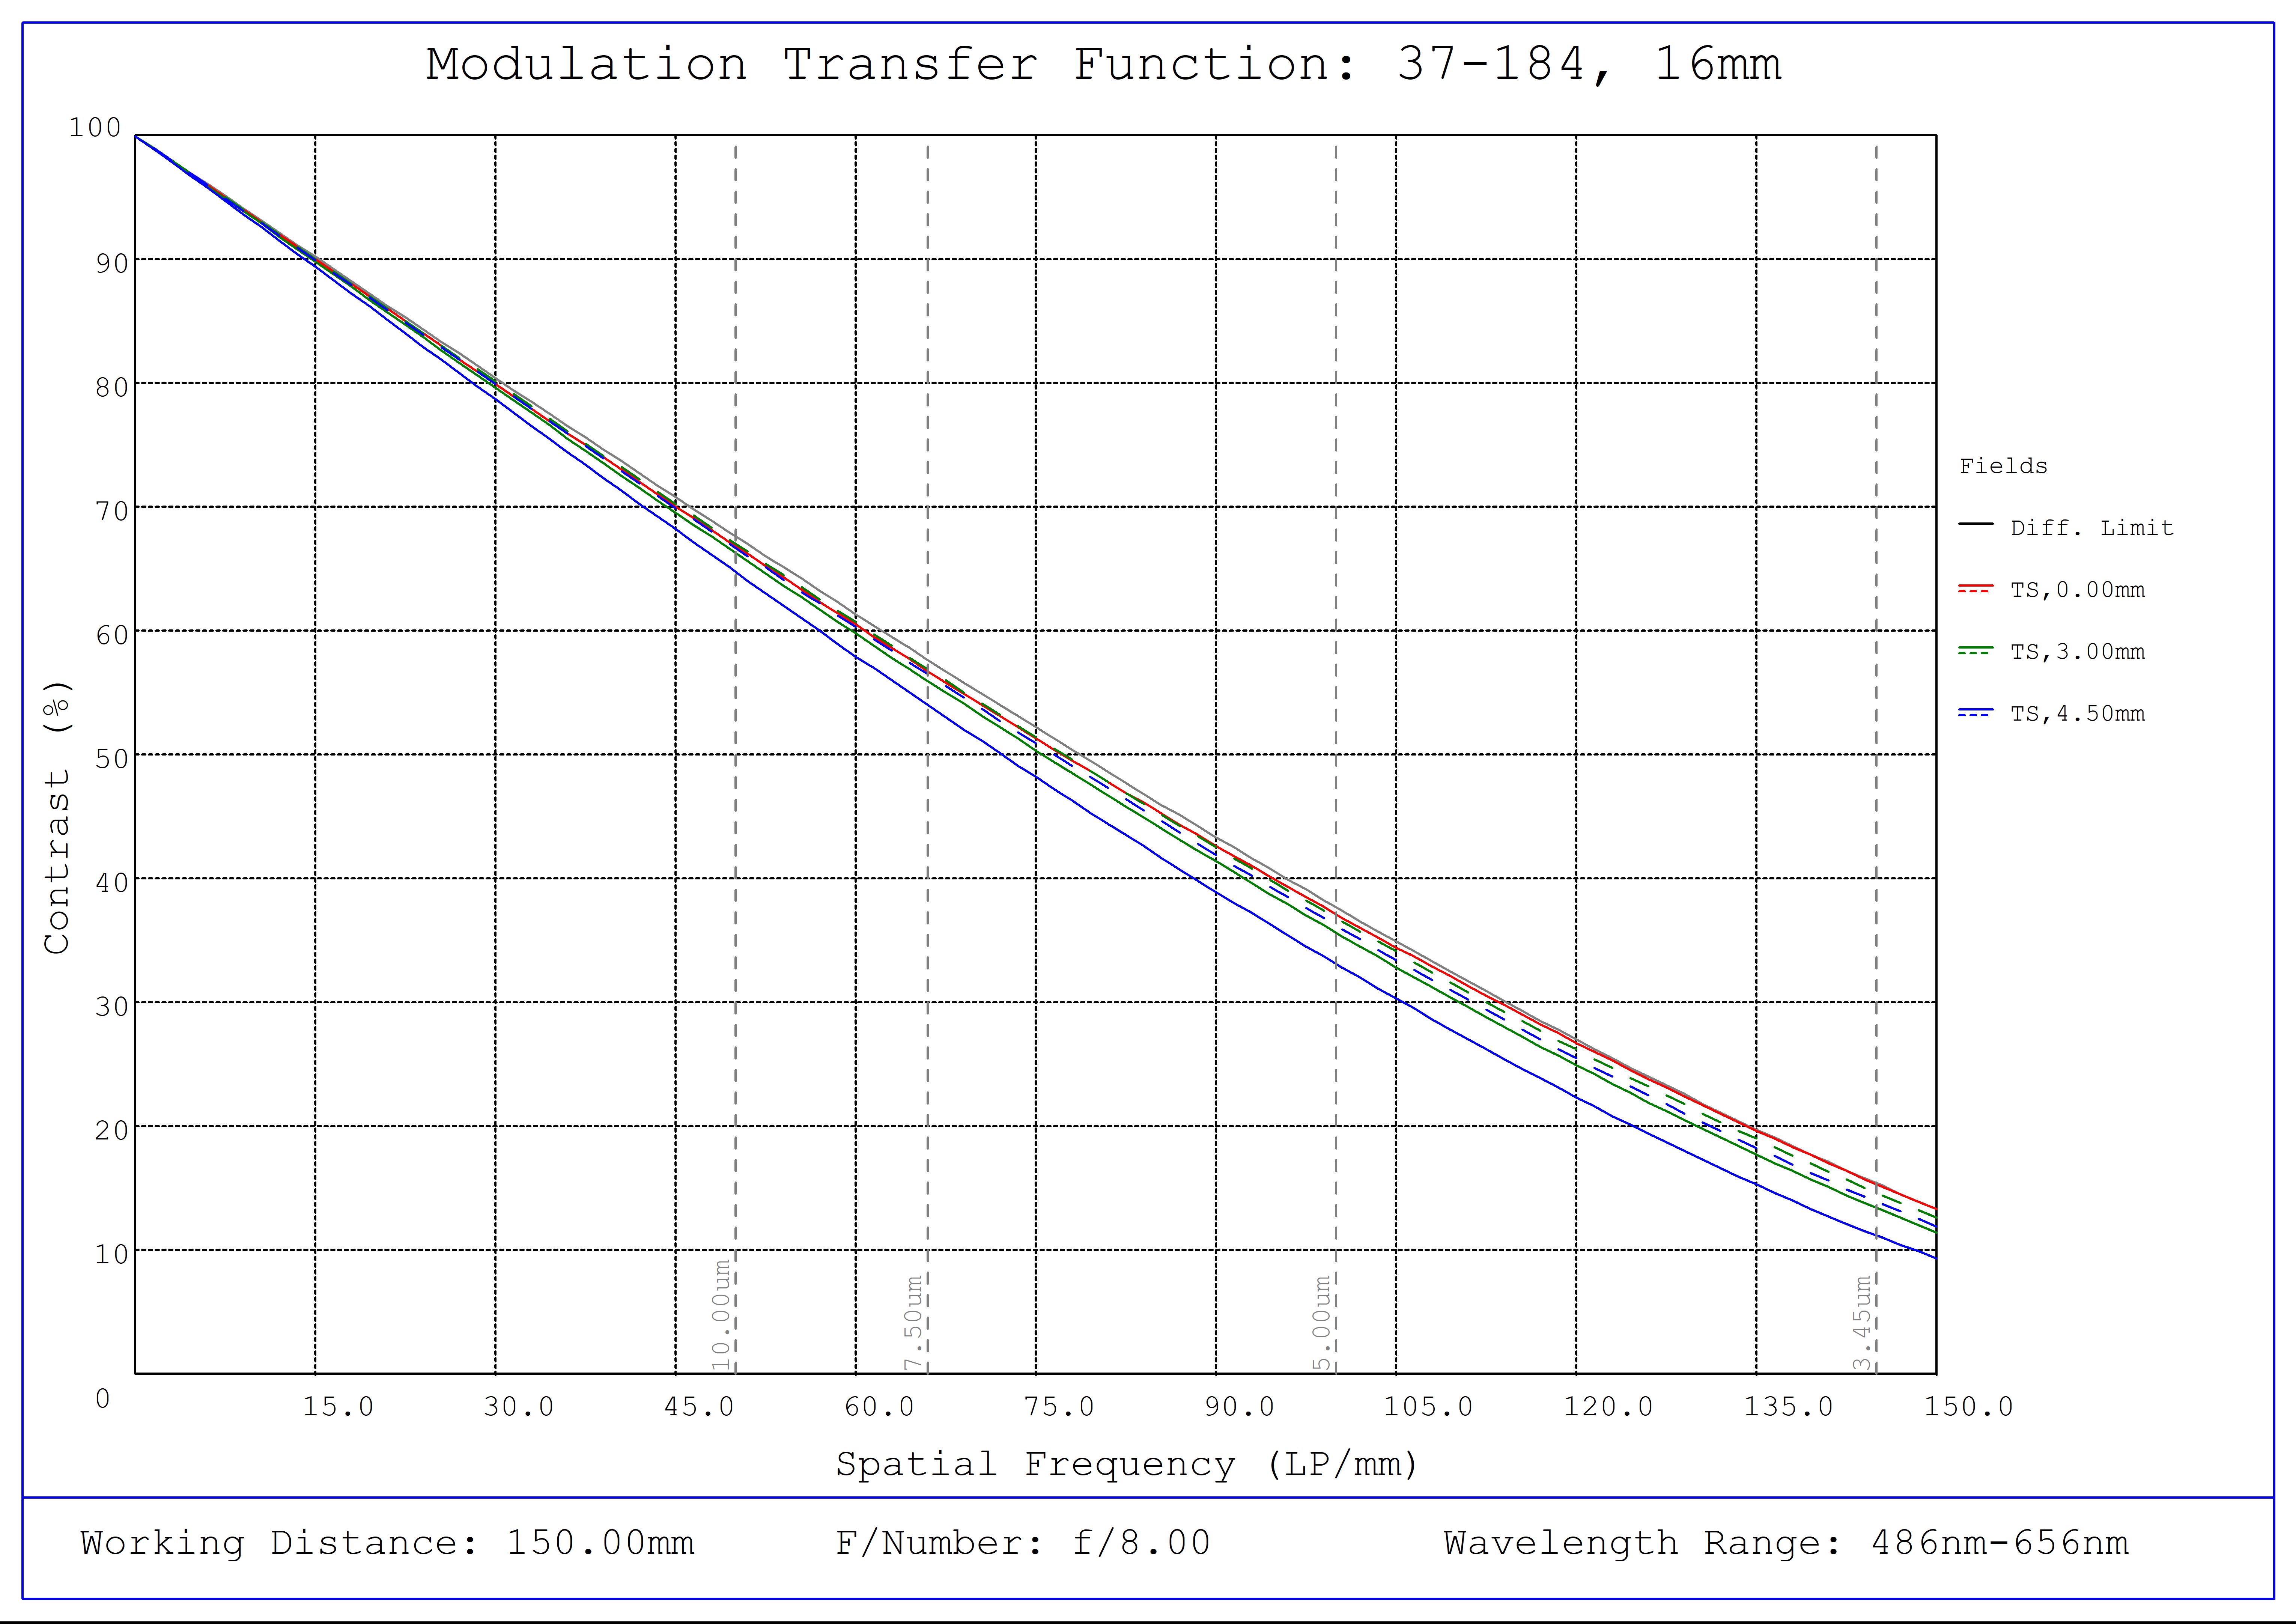 #37-184, 16mm FL f/8.0 Blue Series M12 Lens, Modulated Transfer Function (MTF) Plot, 150mm Working Distance, f8